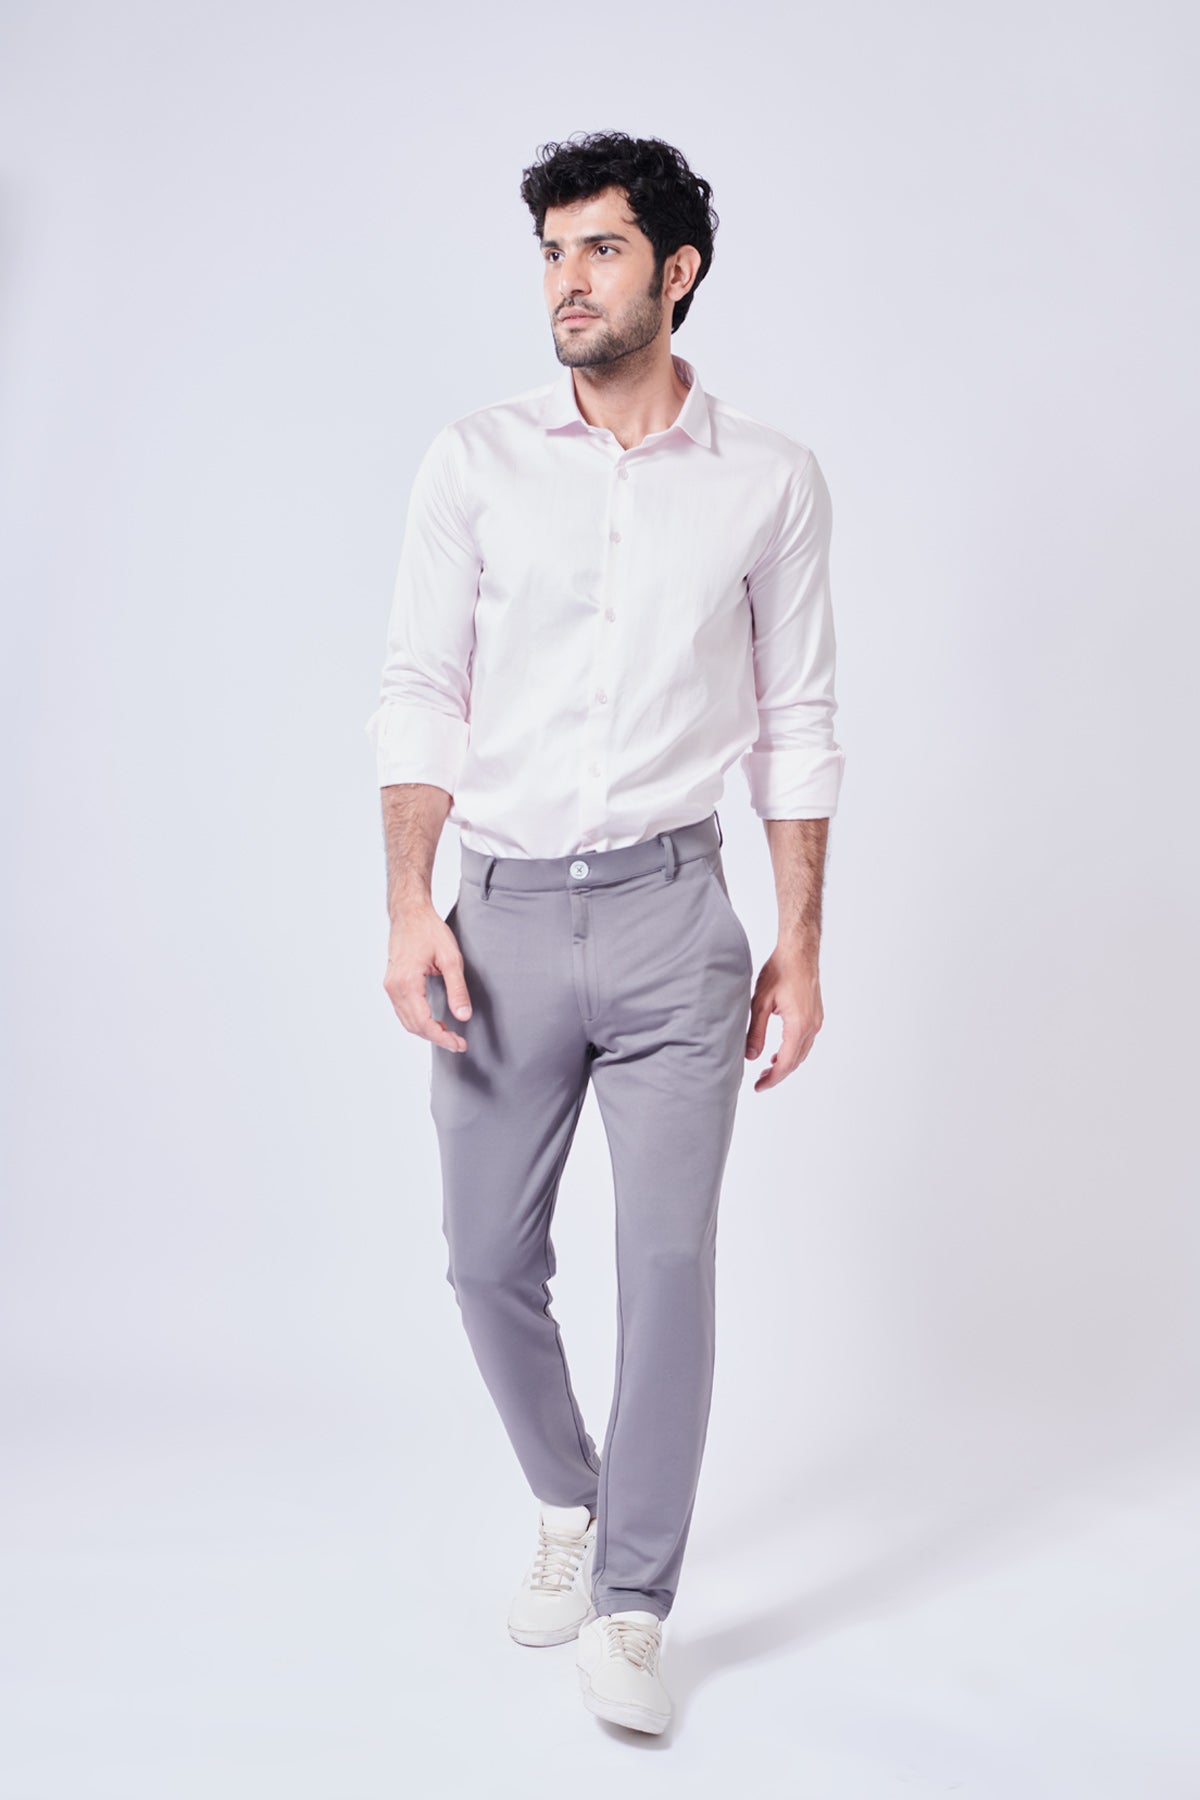 Buy N Naughty Fashion Formal Steel Grey Trouser for Men 28 at Amazonin